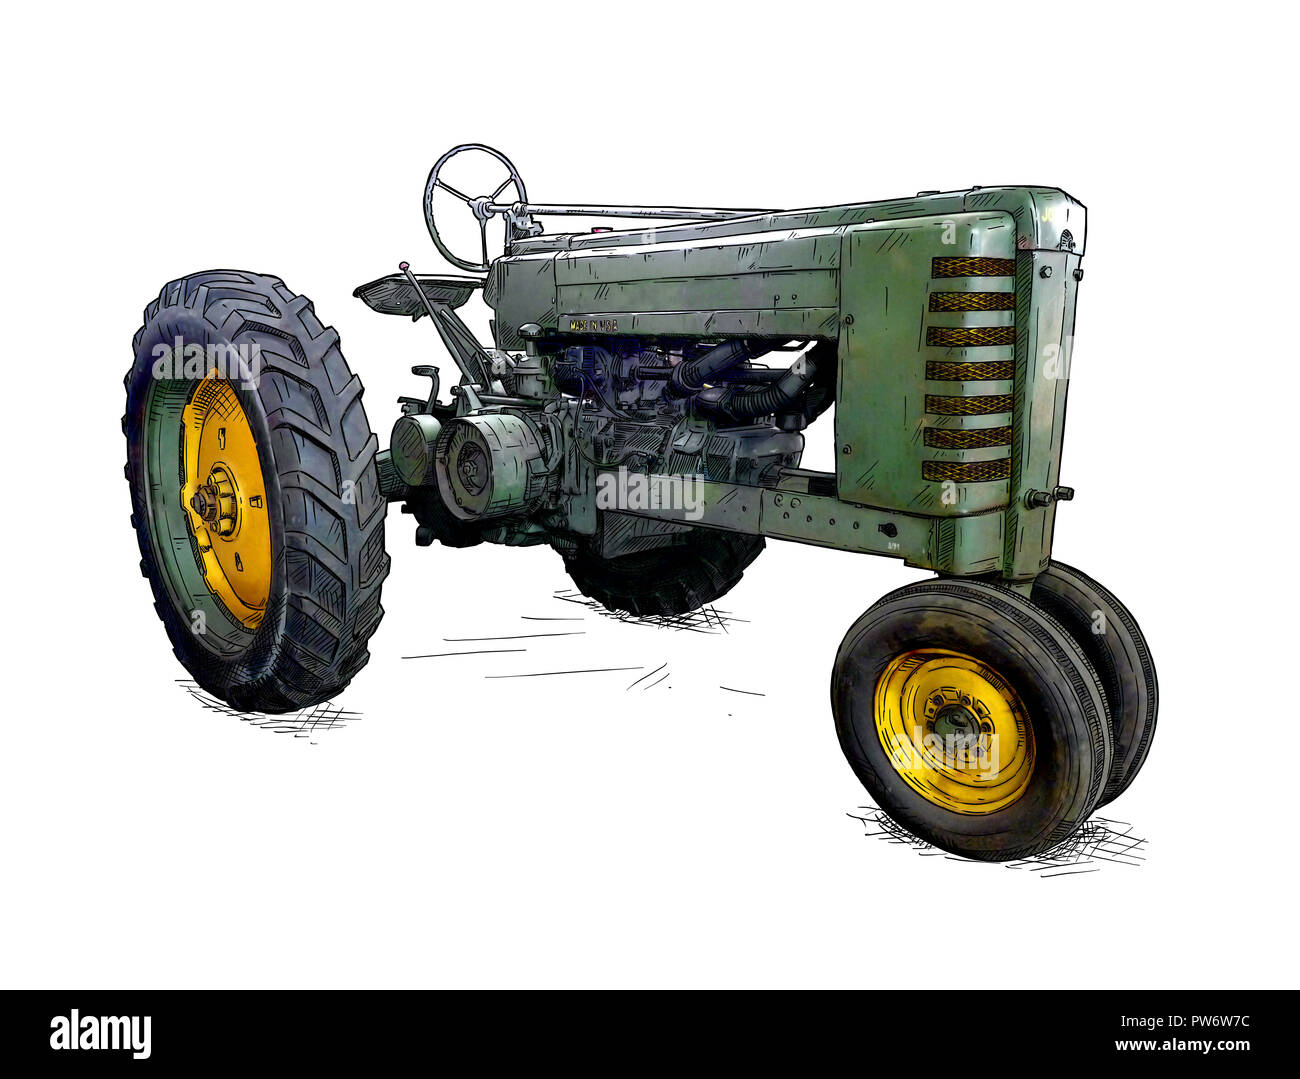 Cartoon oder Comic Stil Abbildung der alten grünen Traktor Stockfoto